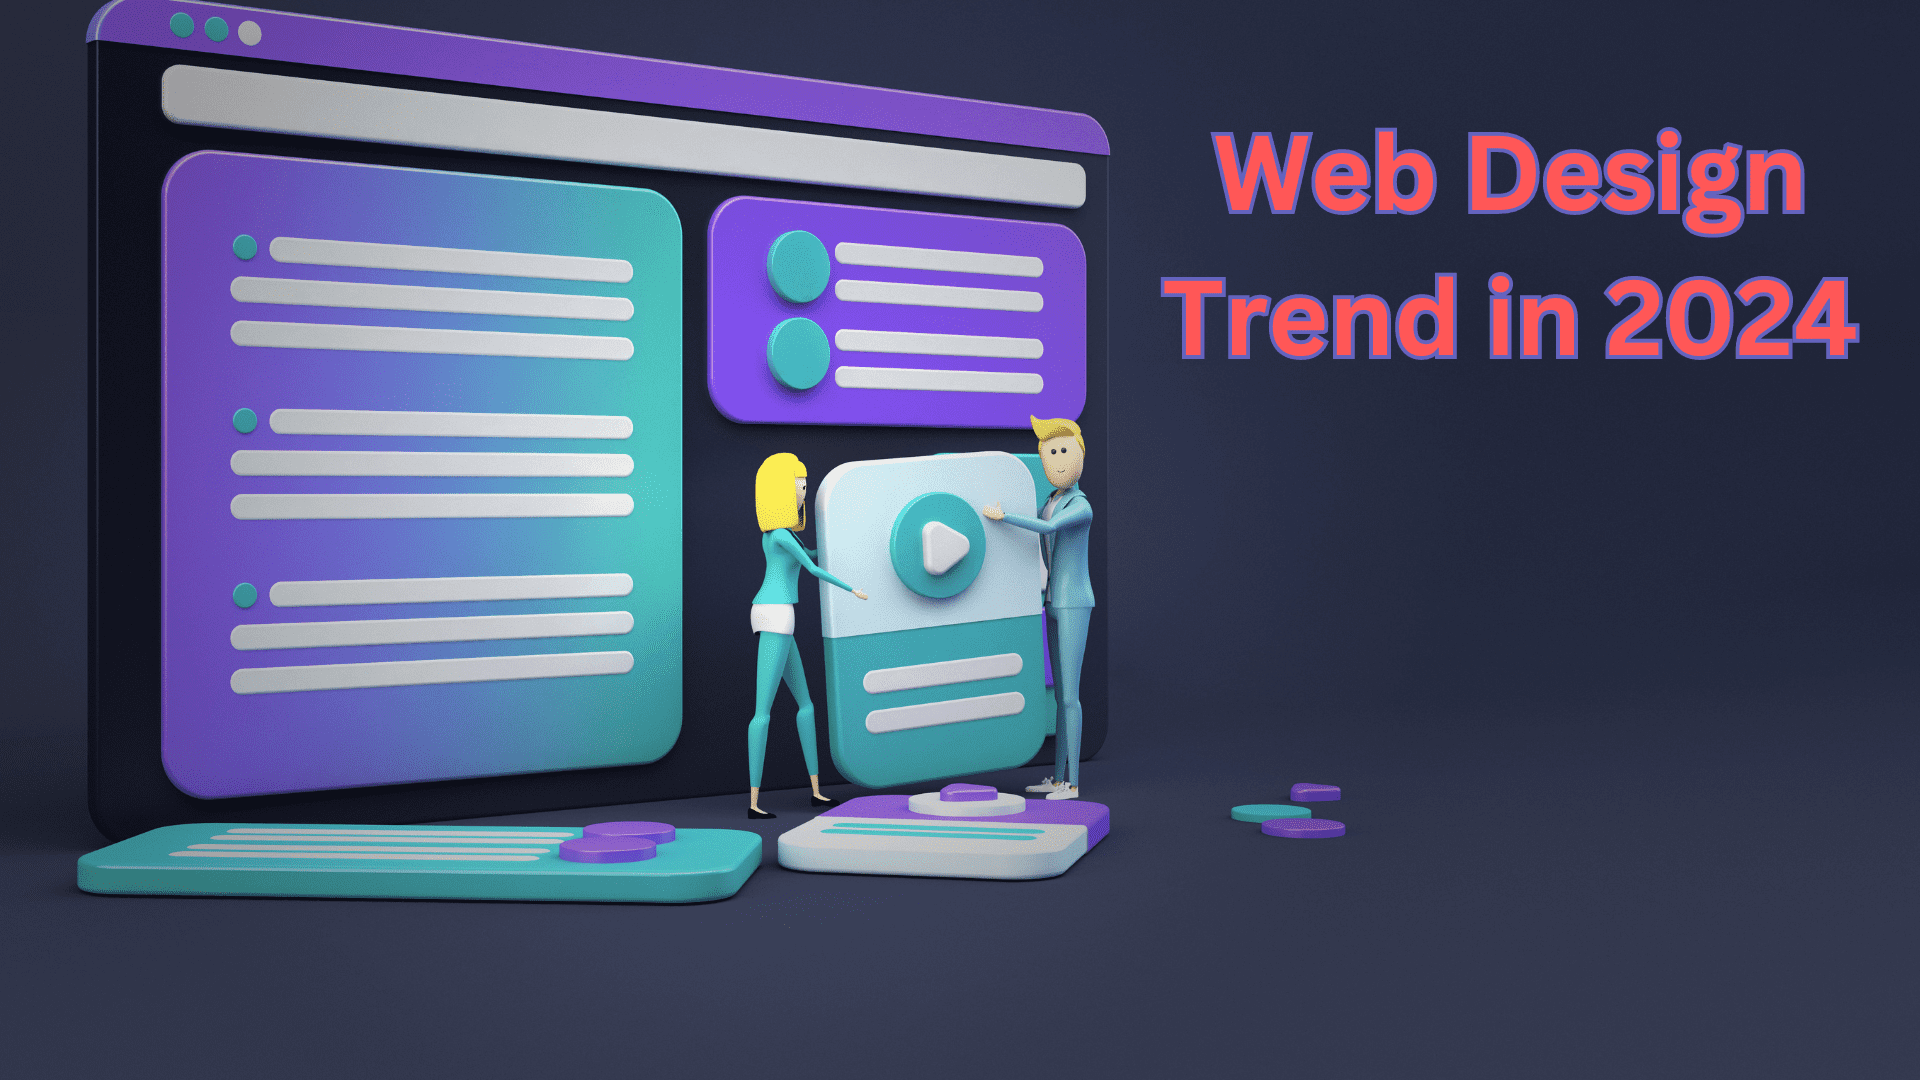 Web design new trends in 2024